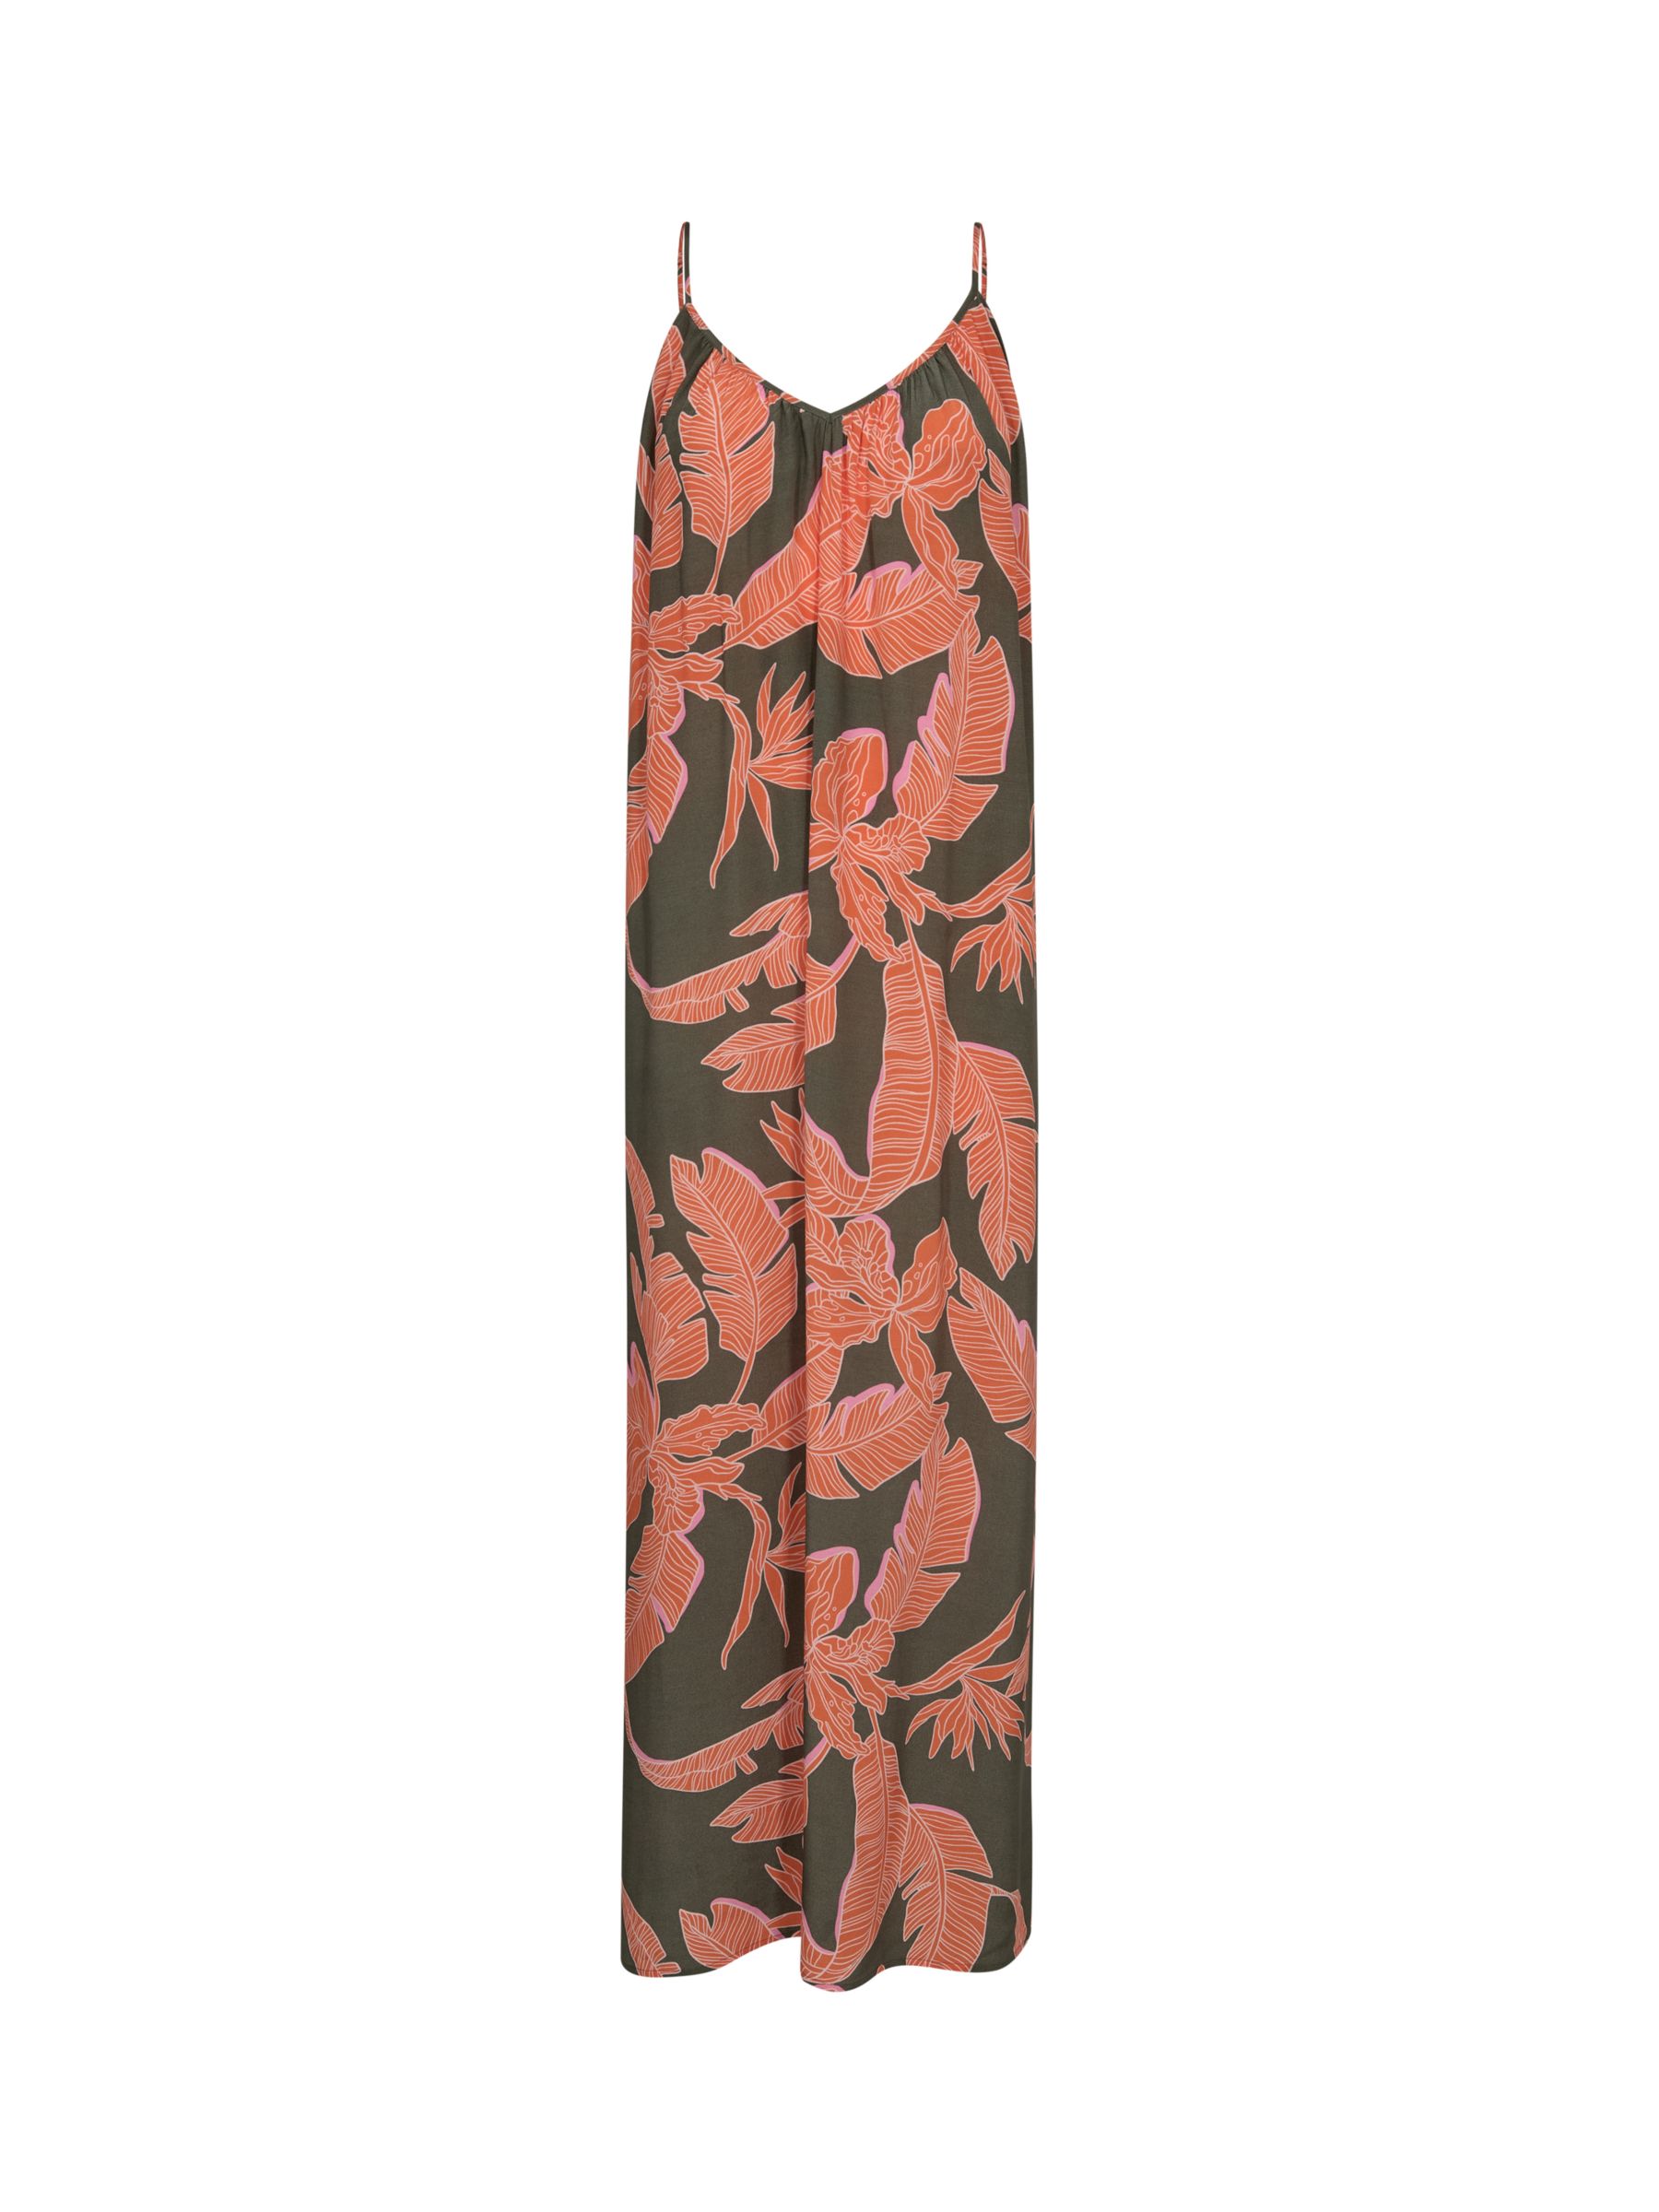 MOS MOSH Alohi Grace Leaf Print Maxi Dress, Dusty Olive/Multi, XS